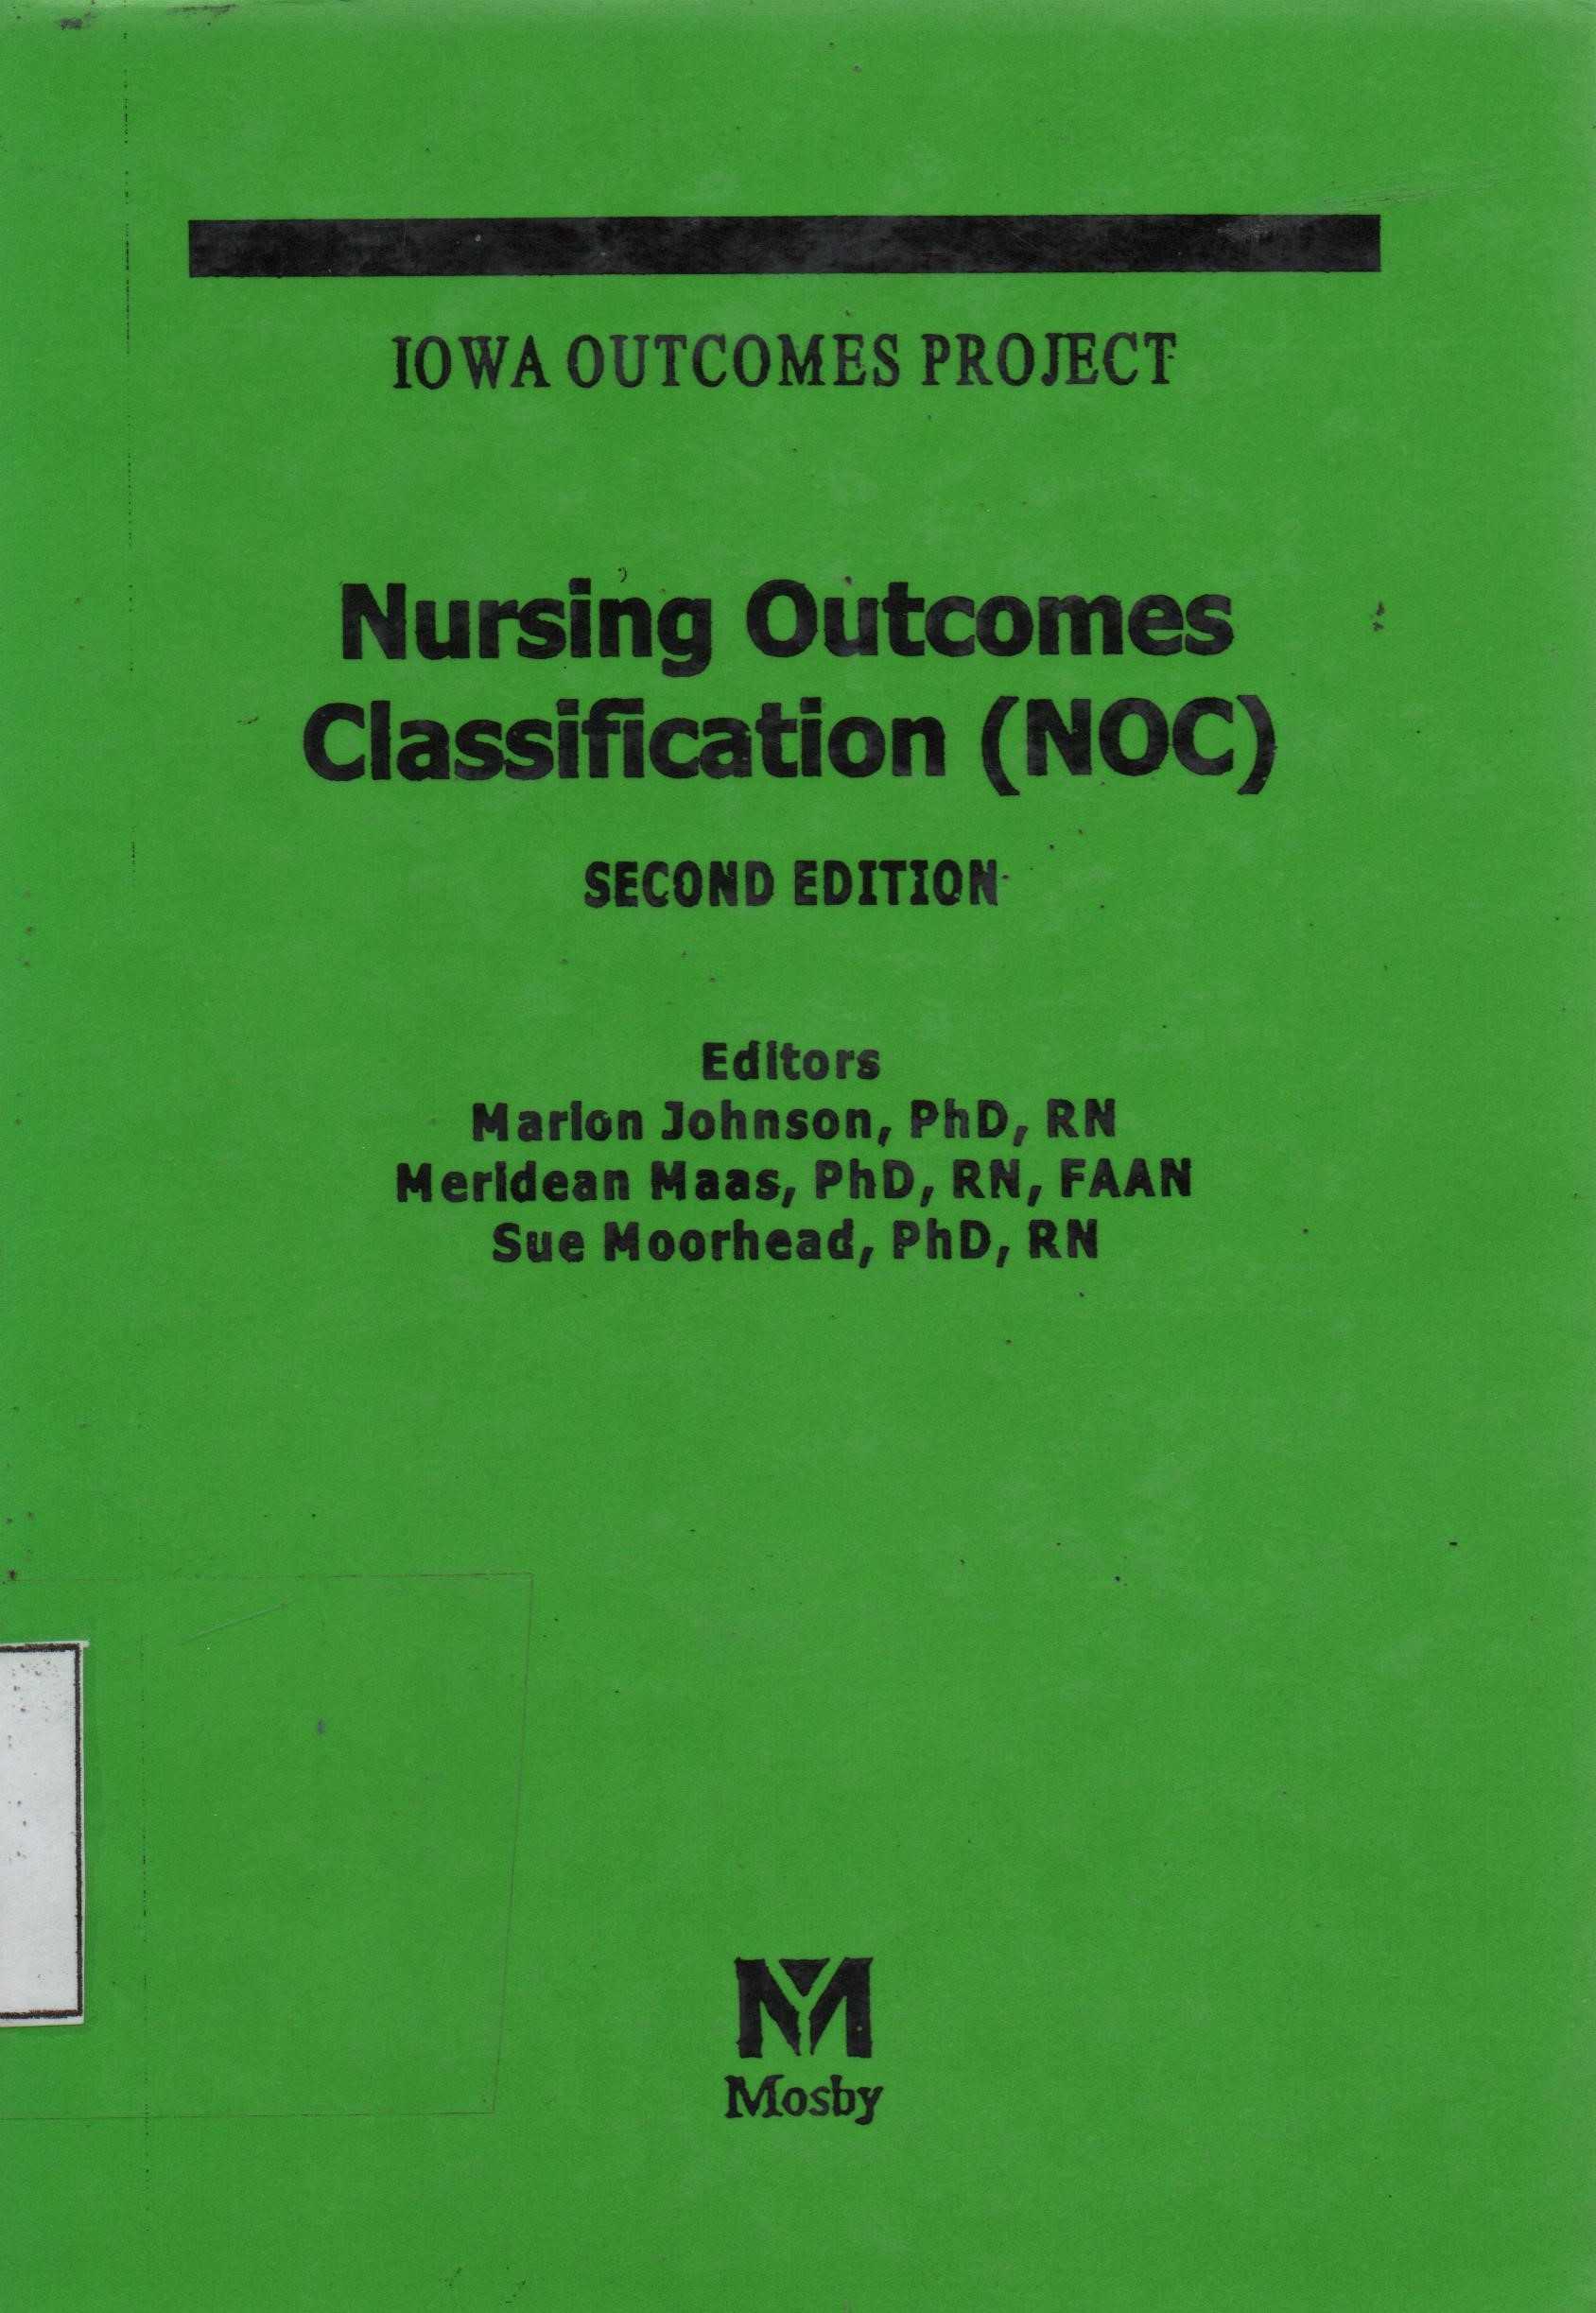 Nursing Outcomes Classification (NOC) Second Edition